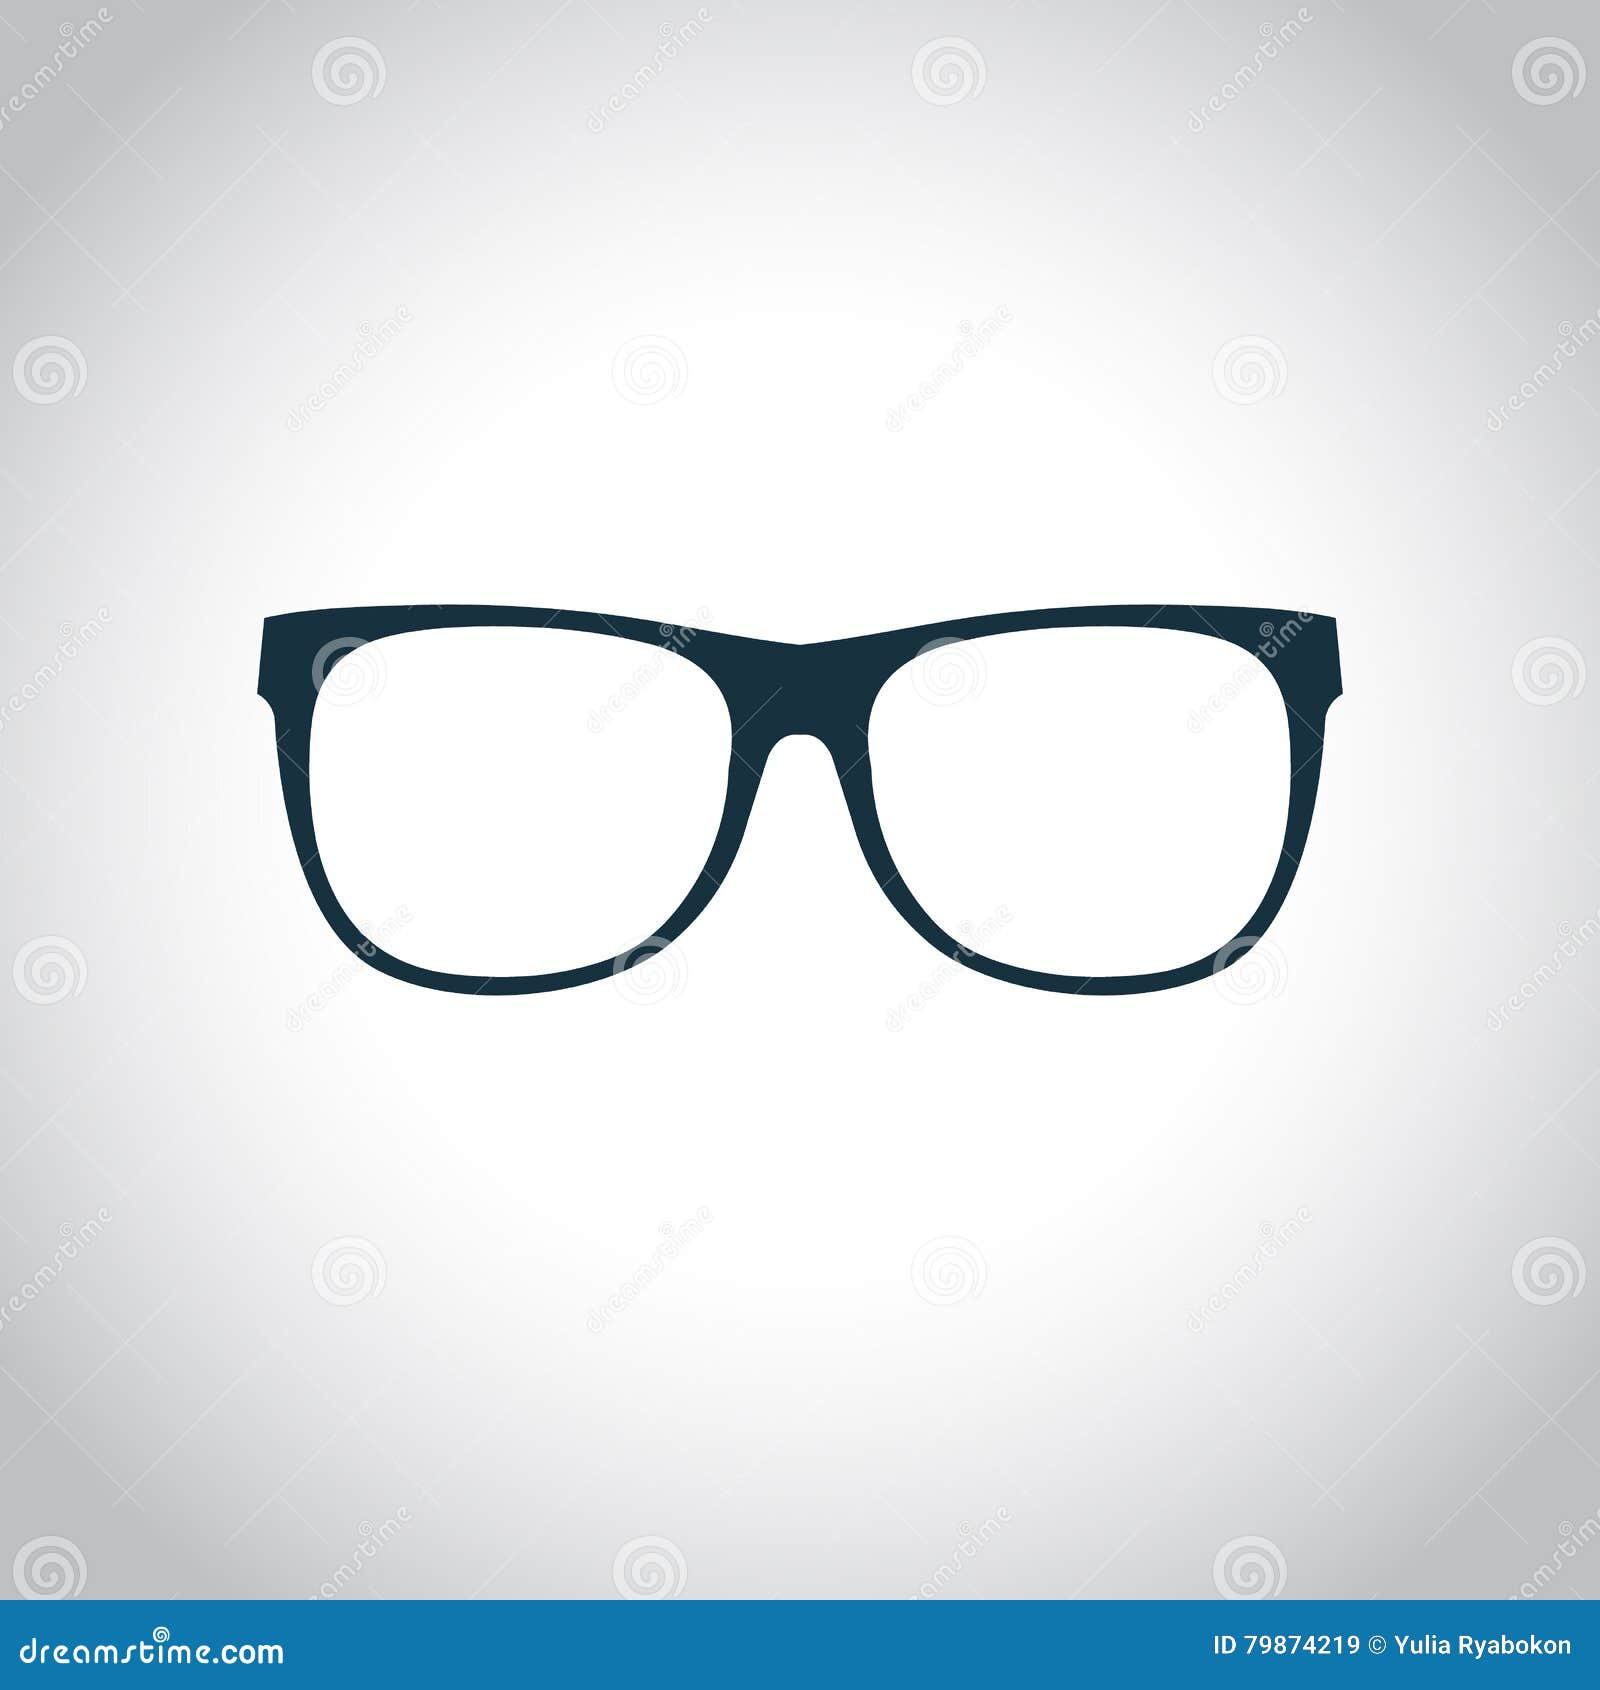 eyeglasses black icon